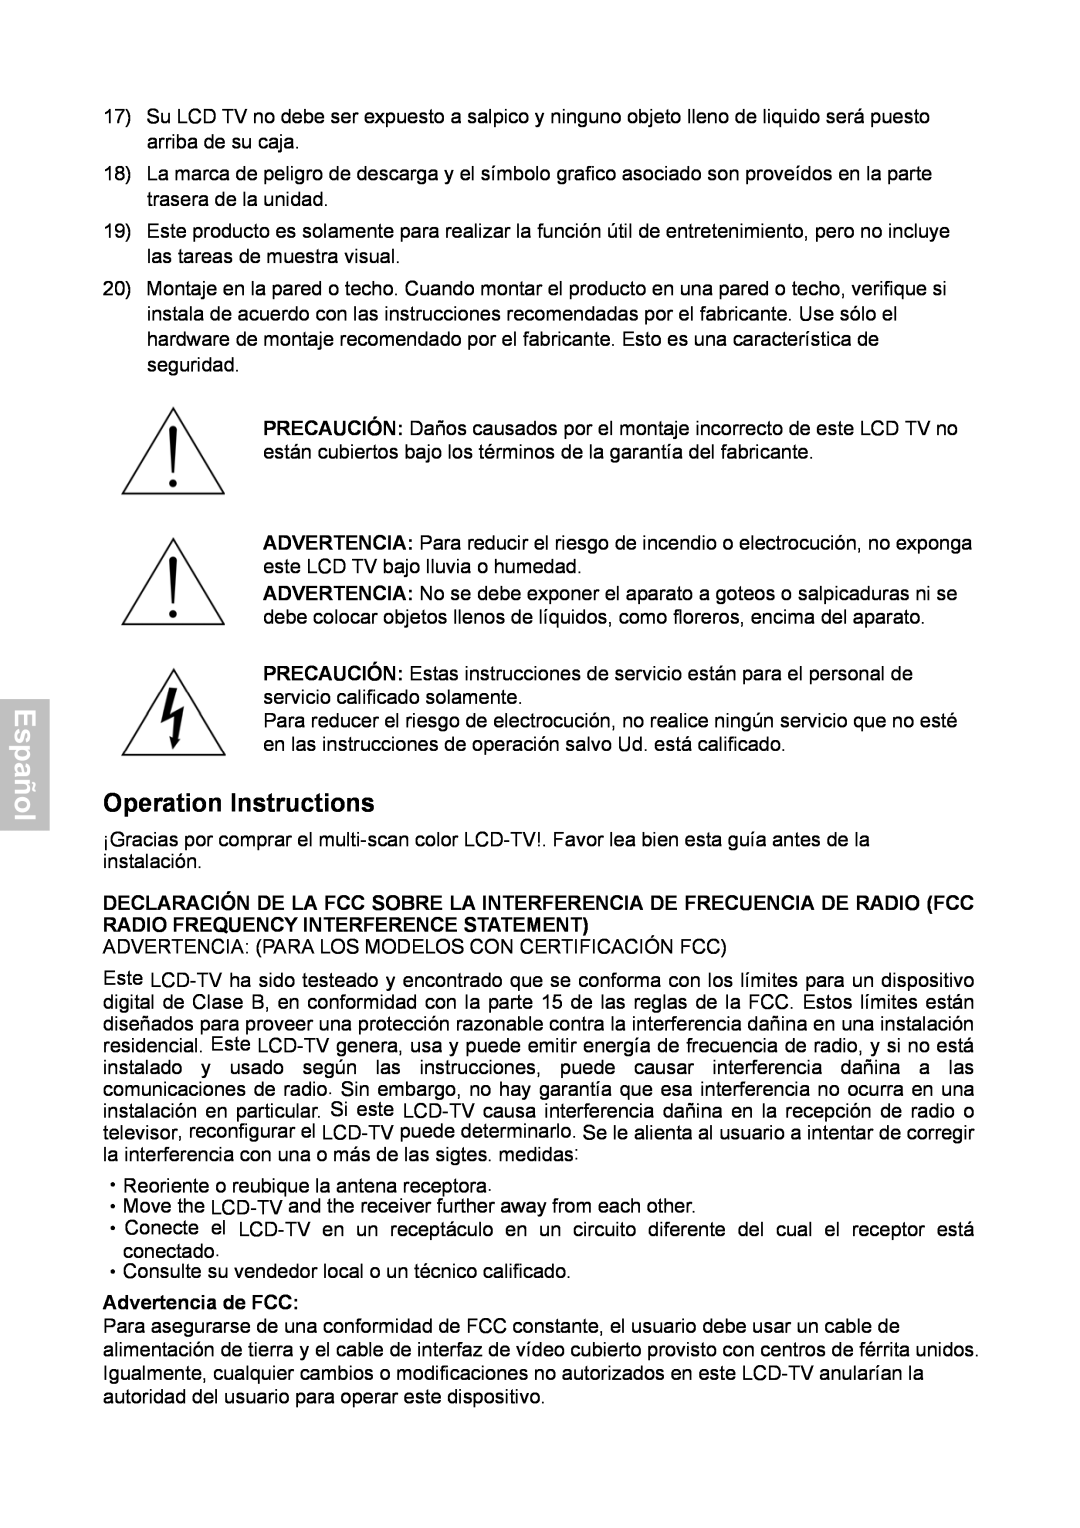 HANNspree XV Series 32 manual Español, Operation Instructions, Advertencia de FCC 